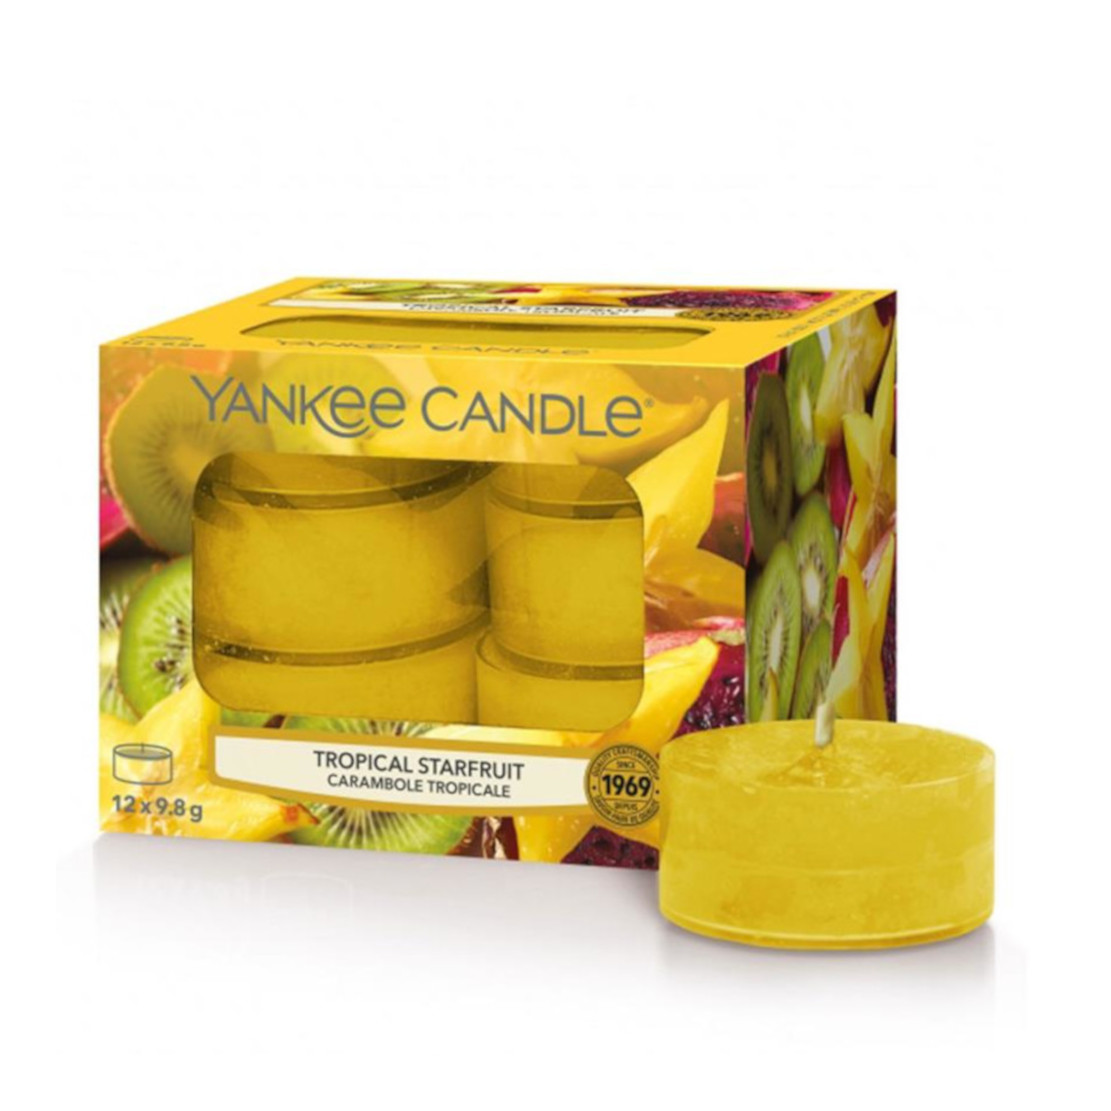 Yankee Candle Tropical Starfruit Tea Lights